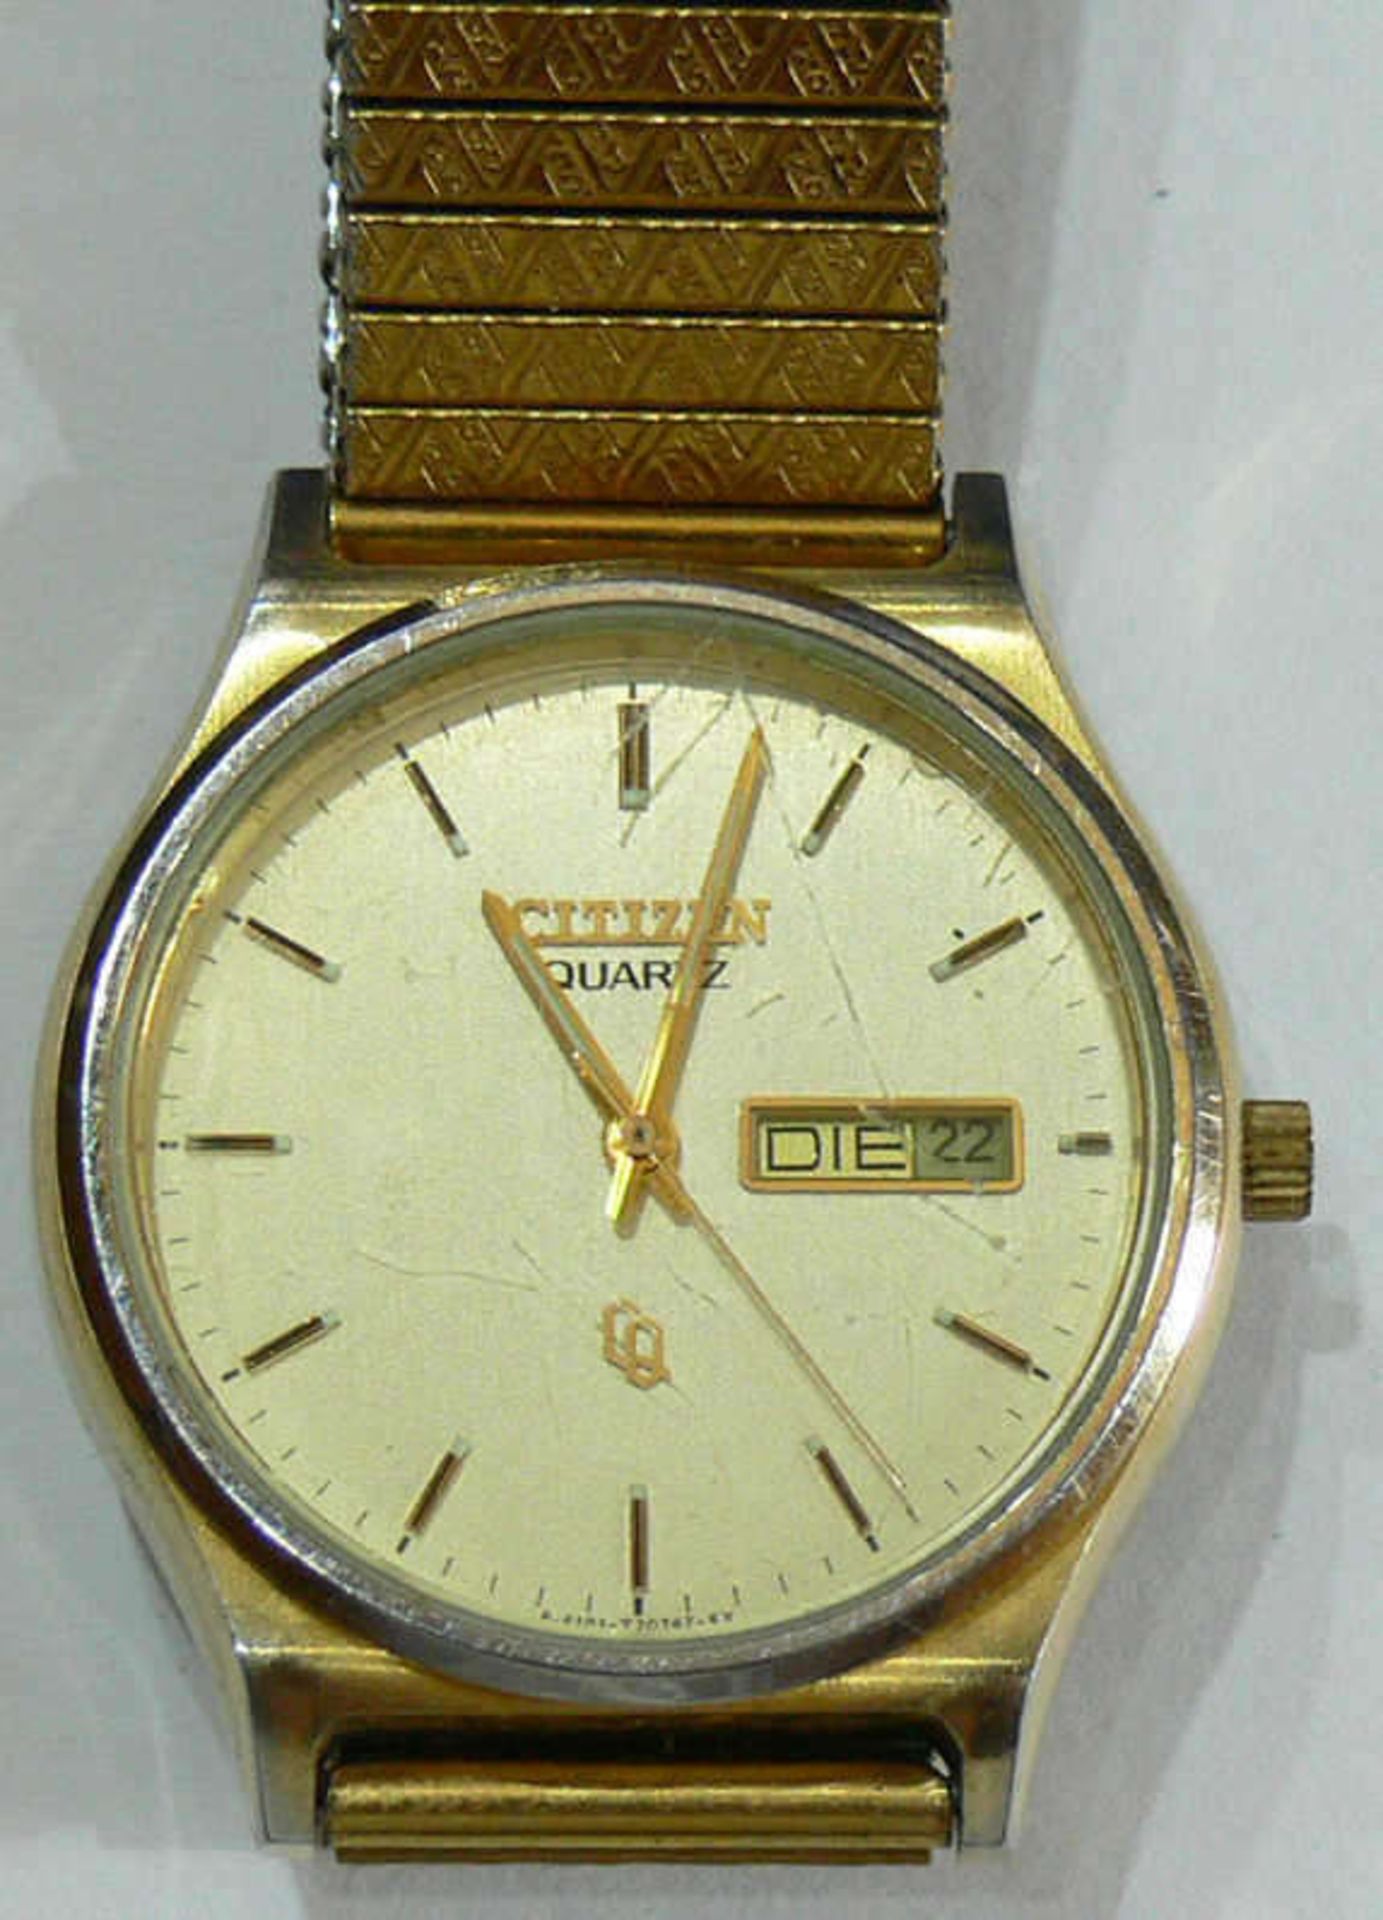 Citizen Quarz Herren - Armbanduhr. Bicolor - Gehäuse und Bicolor - Flexarmband. Goldene